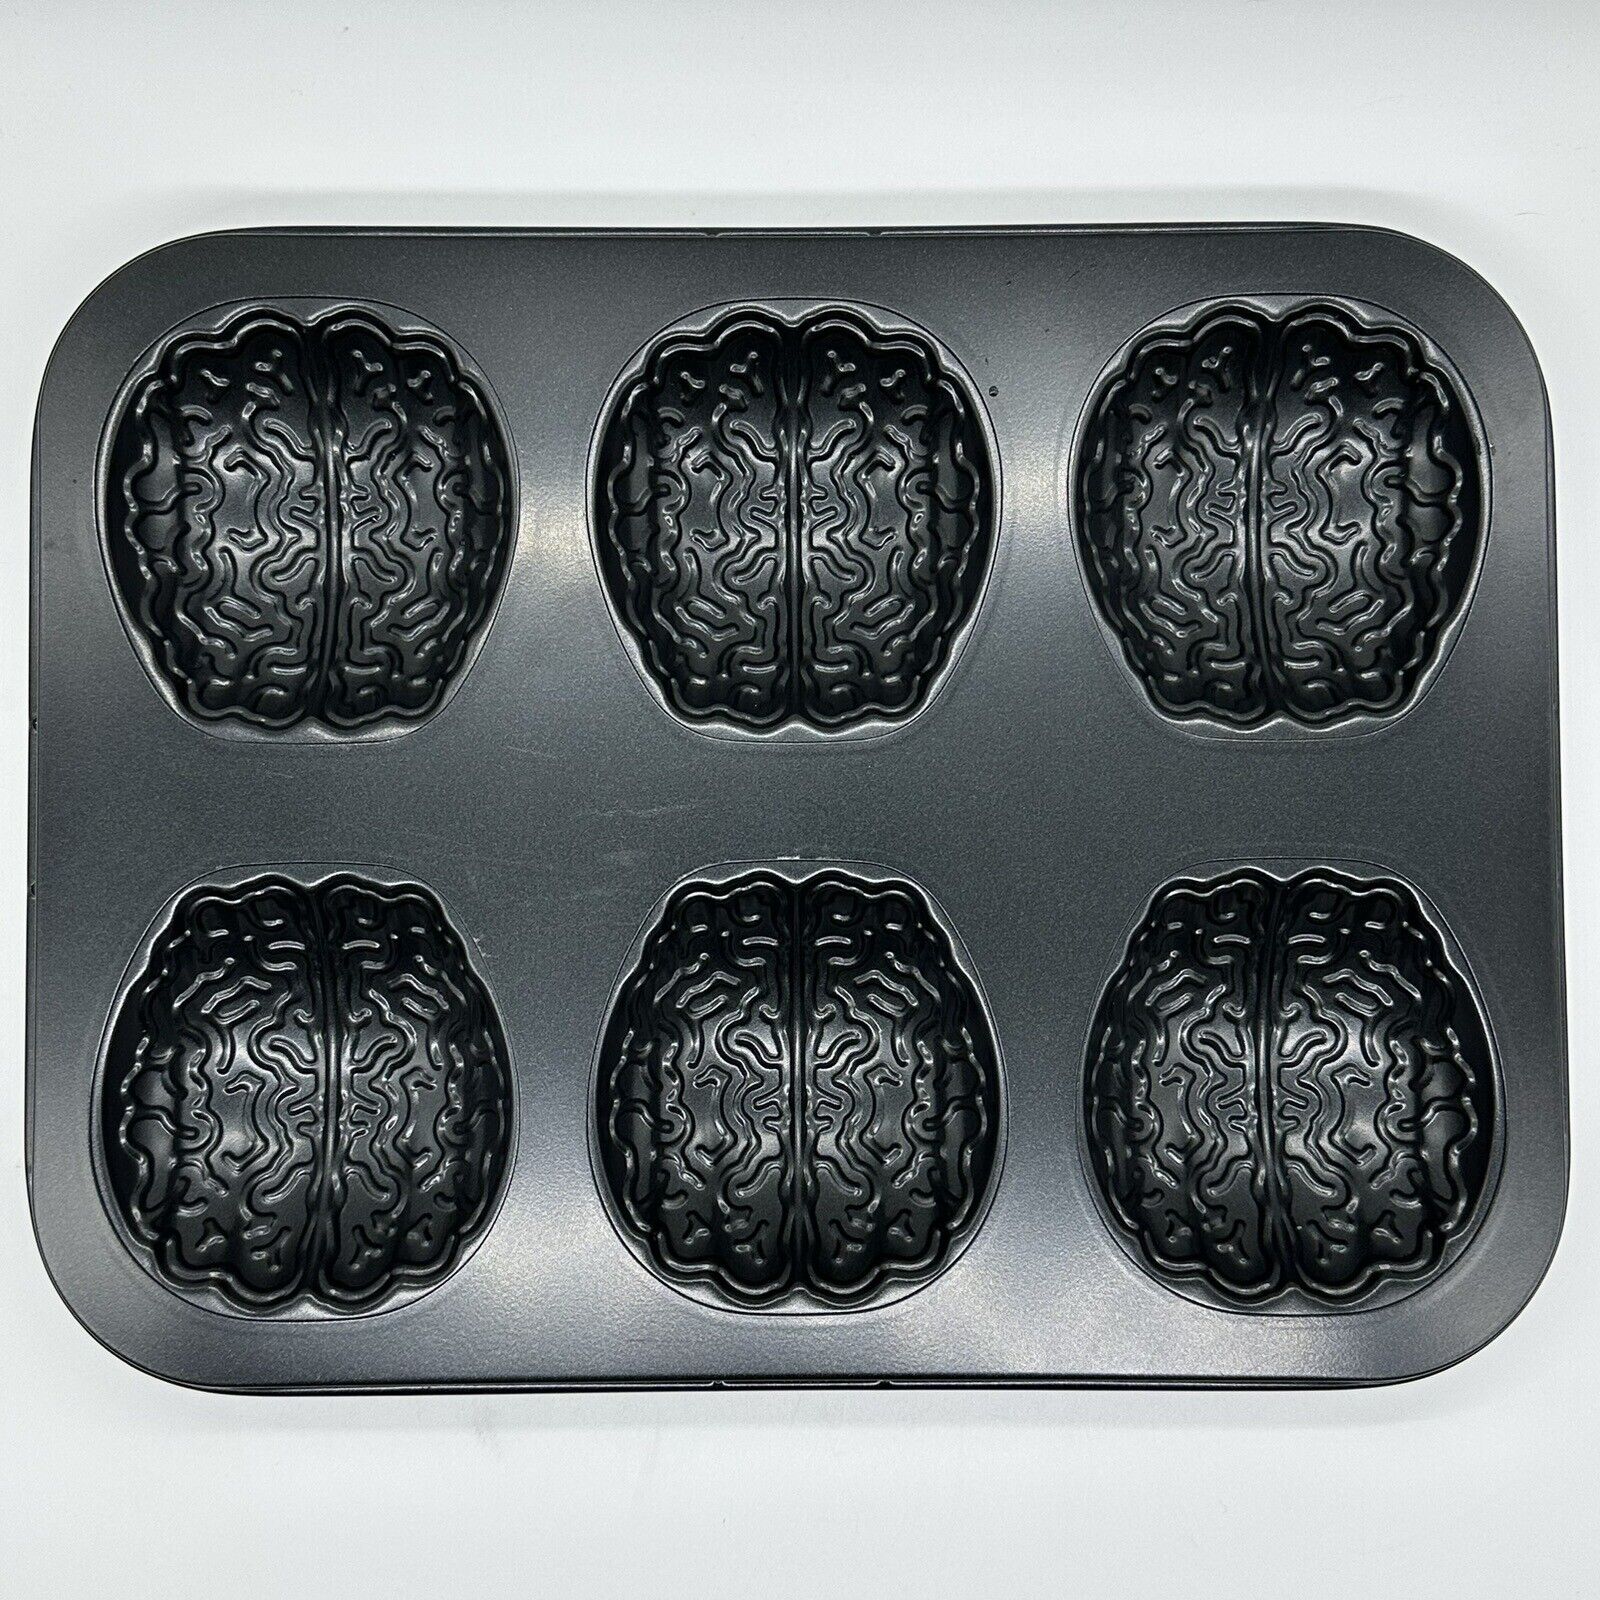 Nordic Ware Halloween Brain Cake Pan Cakelette Treats 6 Cavity BakeWare Mold